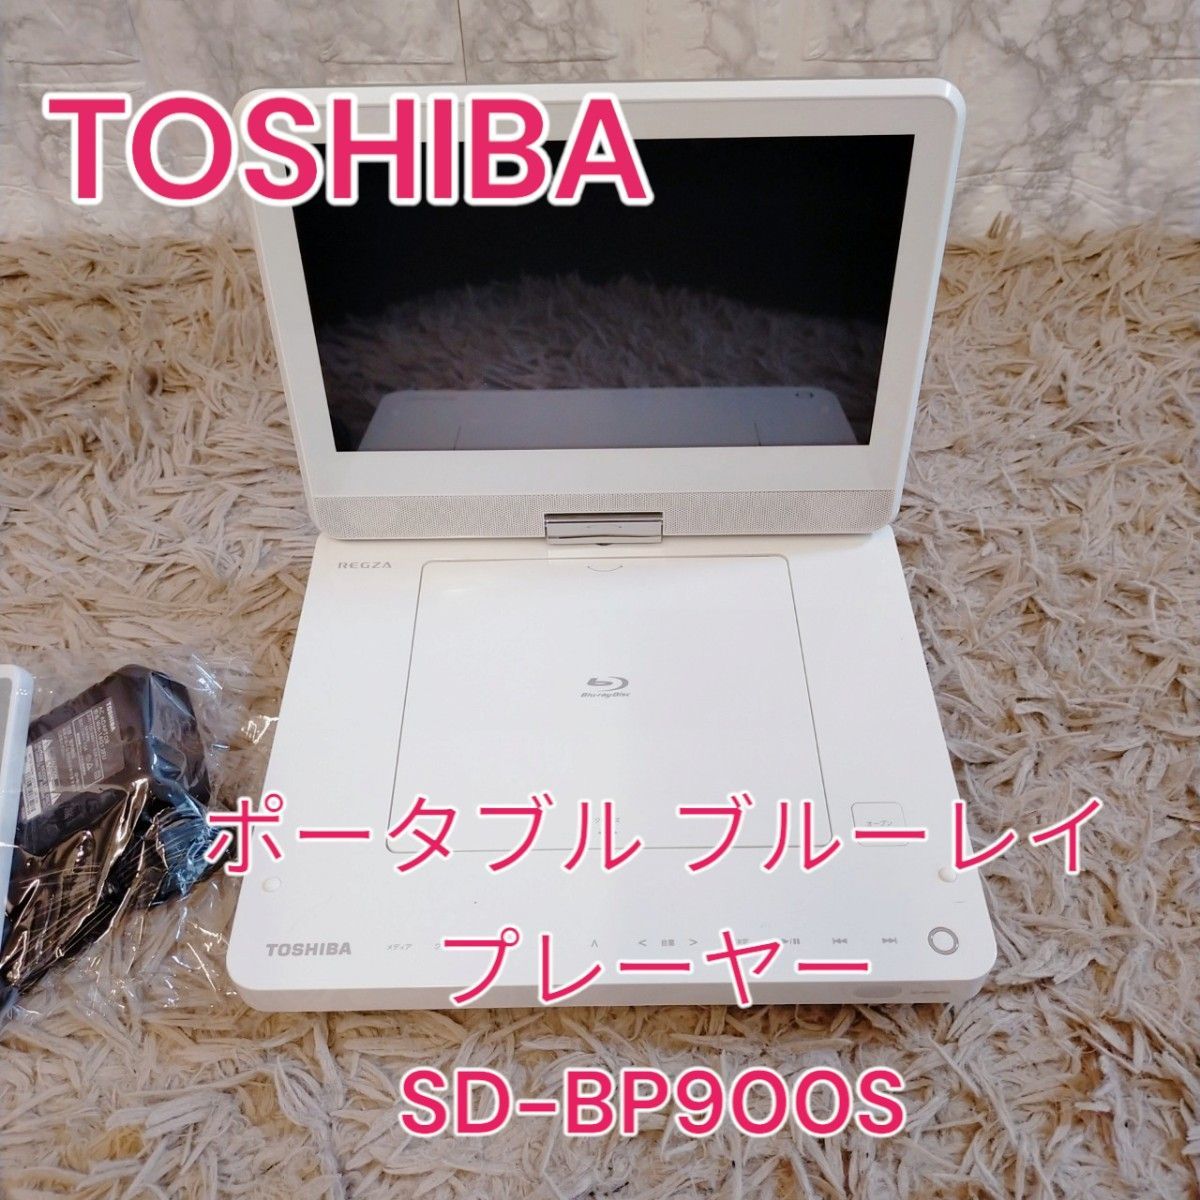 TOSHIBA ポータブルブルーレイプレーヤー SD-BP900S